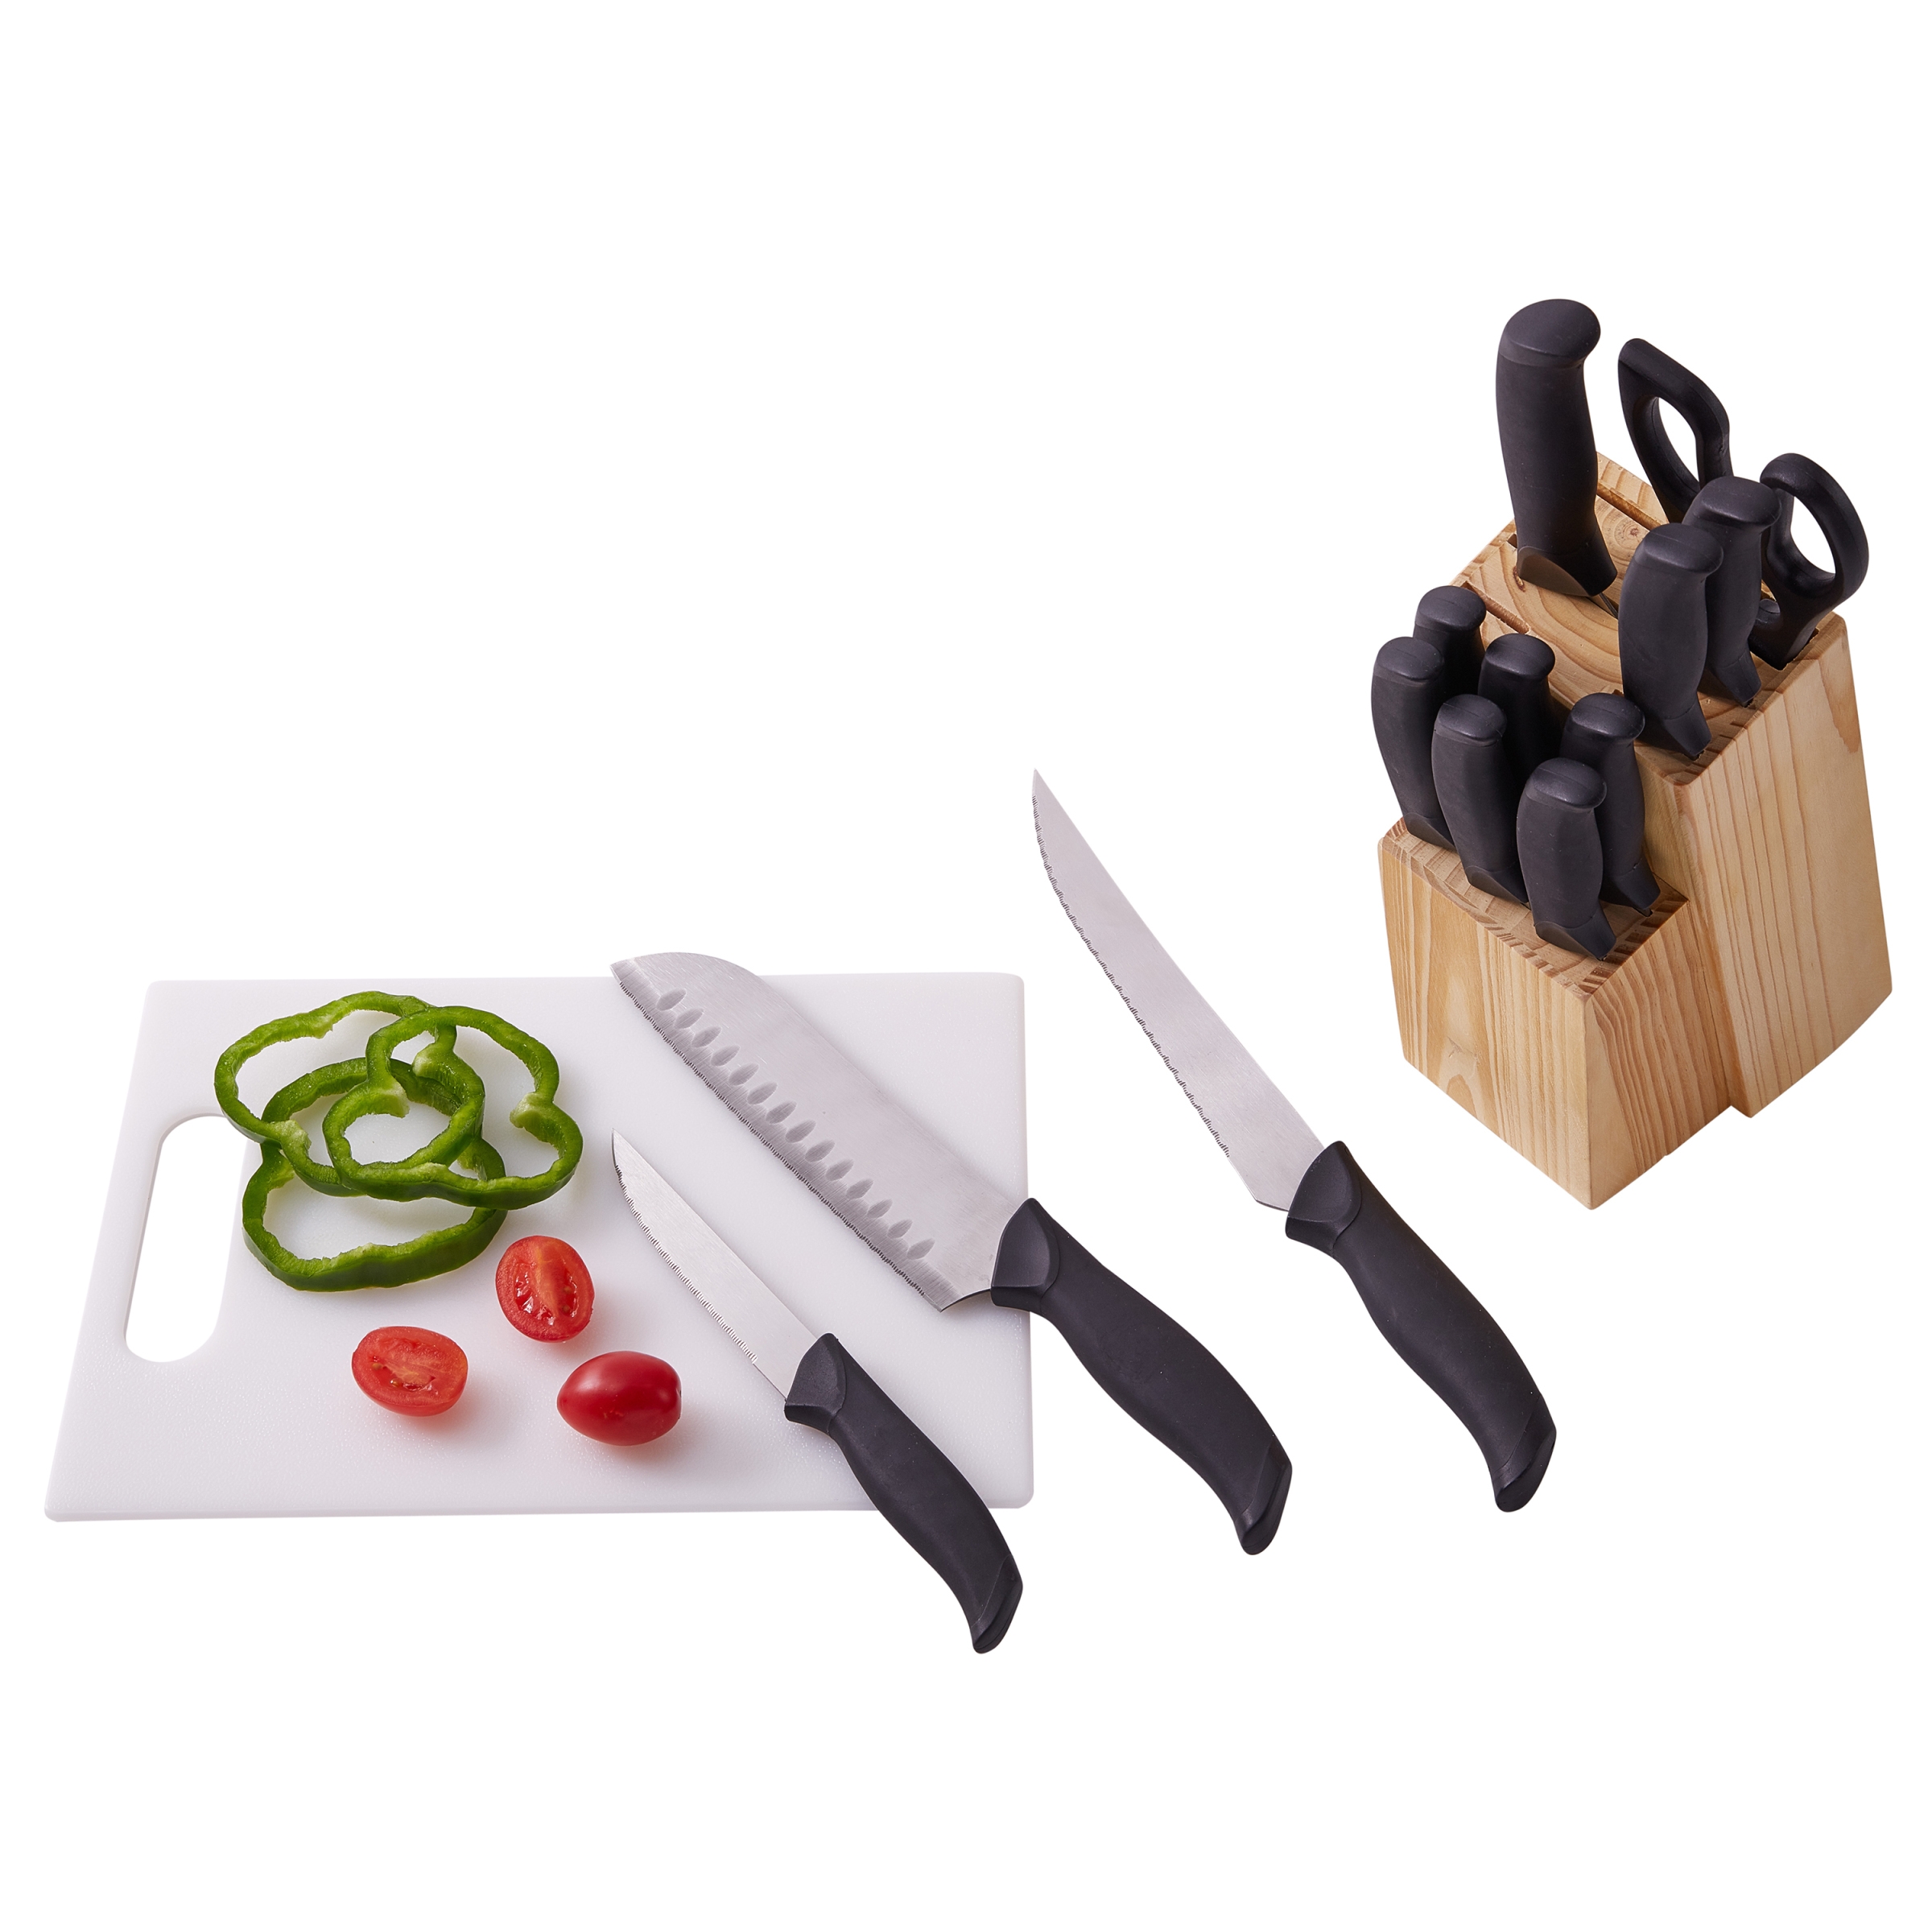 Mainstays Kitchen Cutlery & Gadget Set, 23 Piece - image 1 of 12